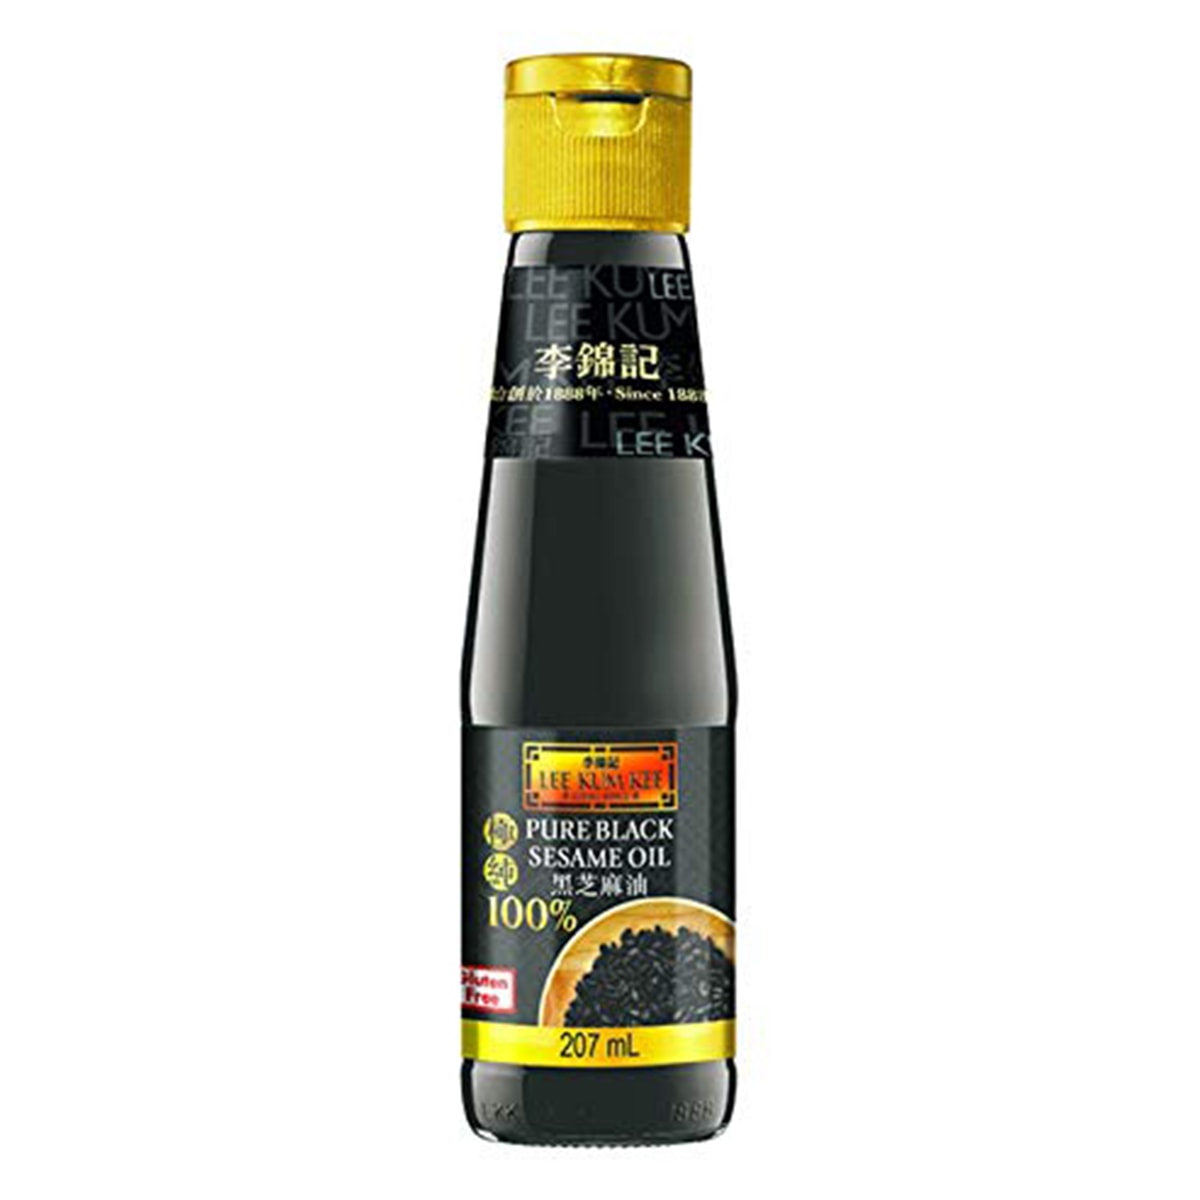 Buy Lee Kum Kee Pure Black Sesame Oil - 207 ml